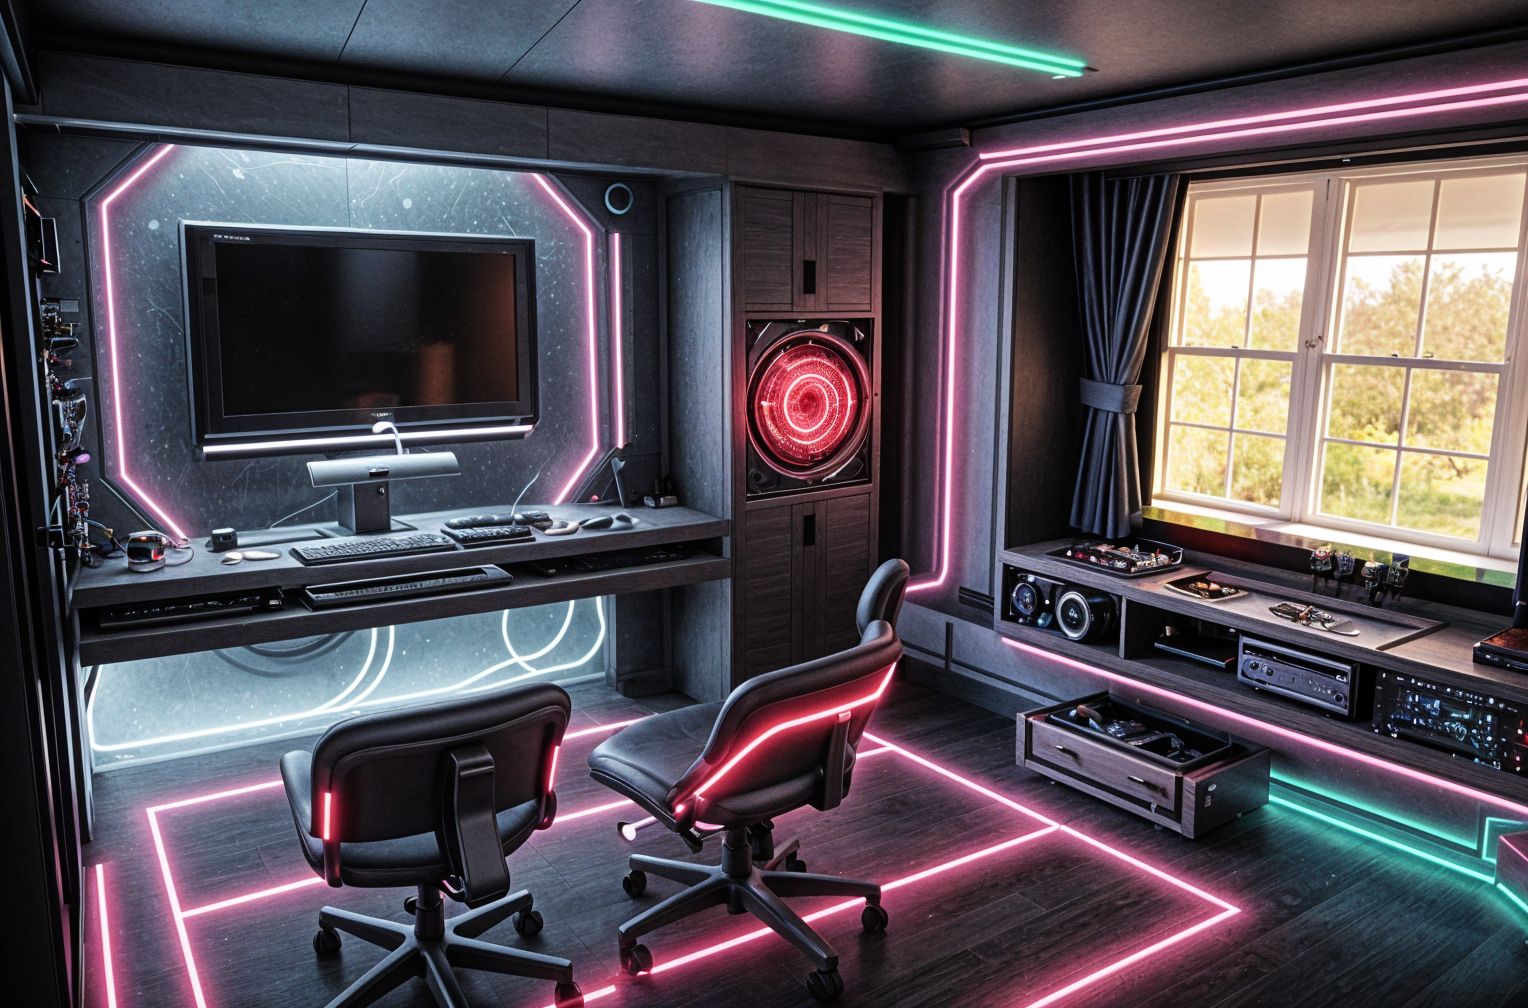 Cyberpunk style Gamer Room